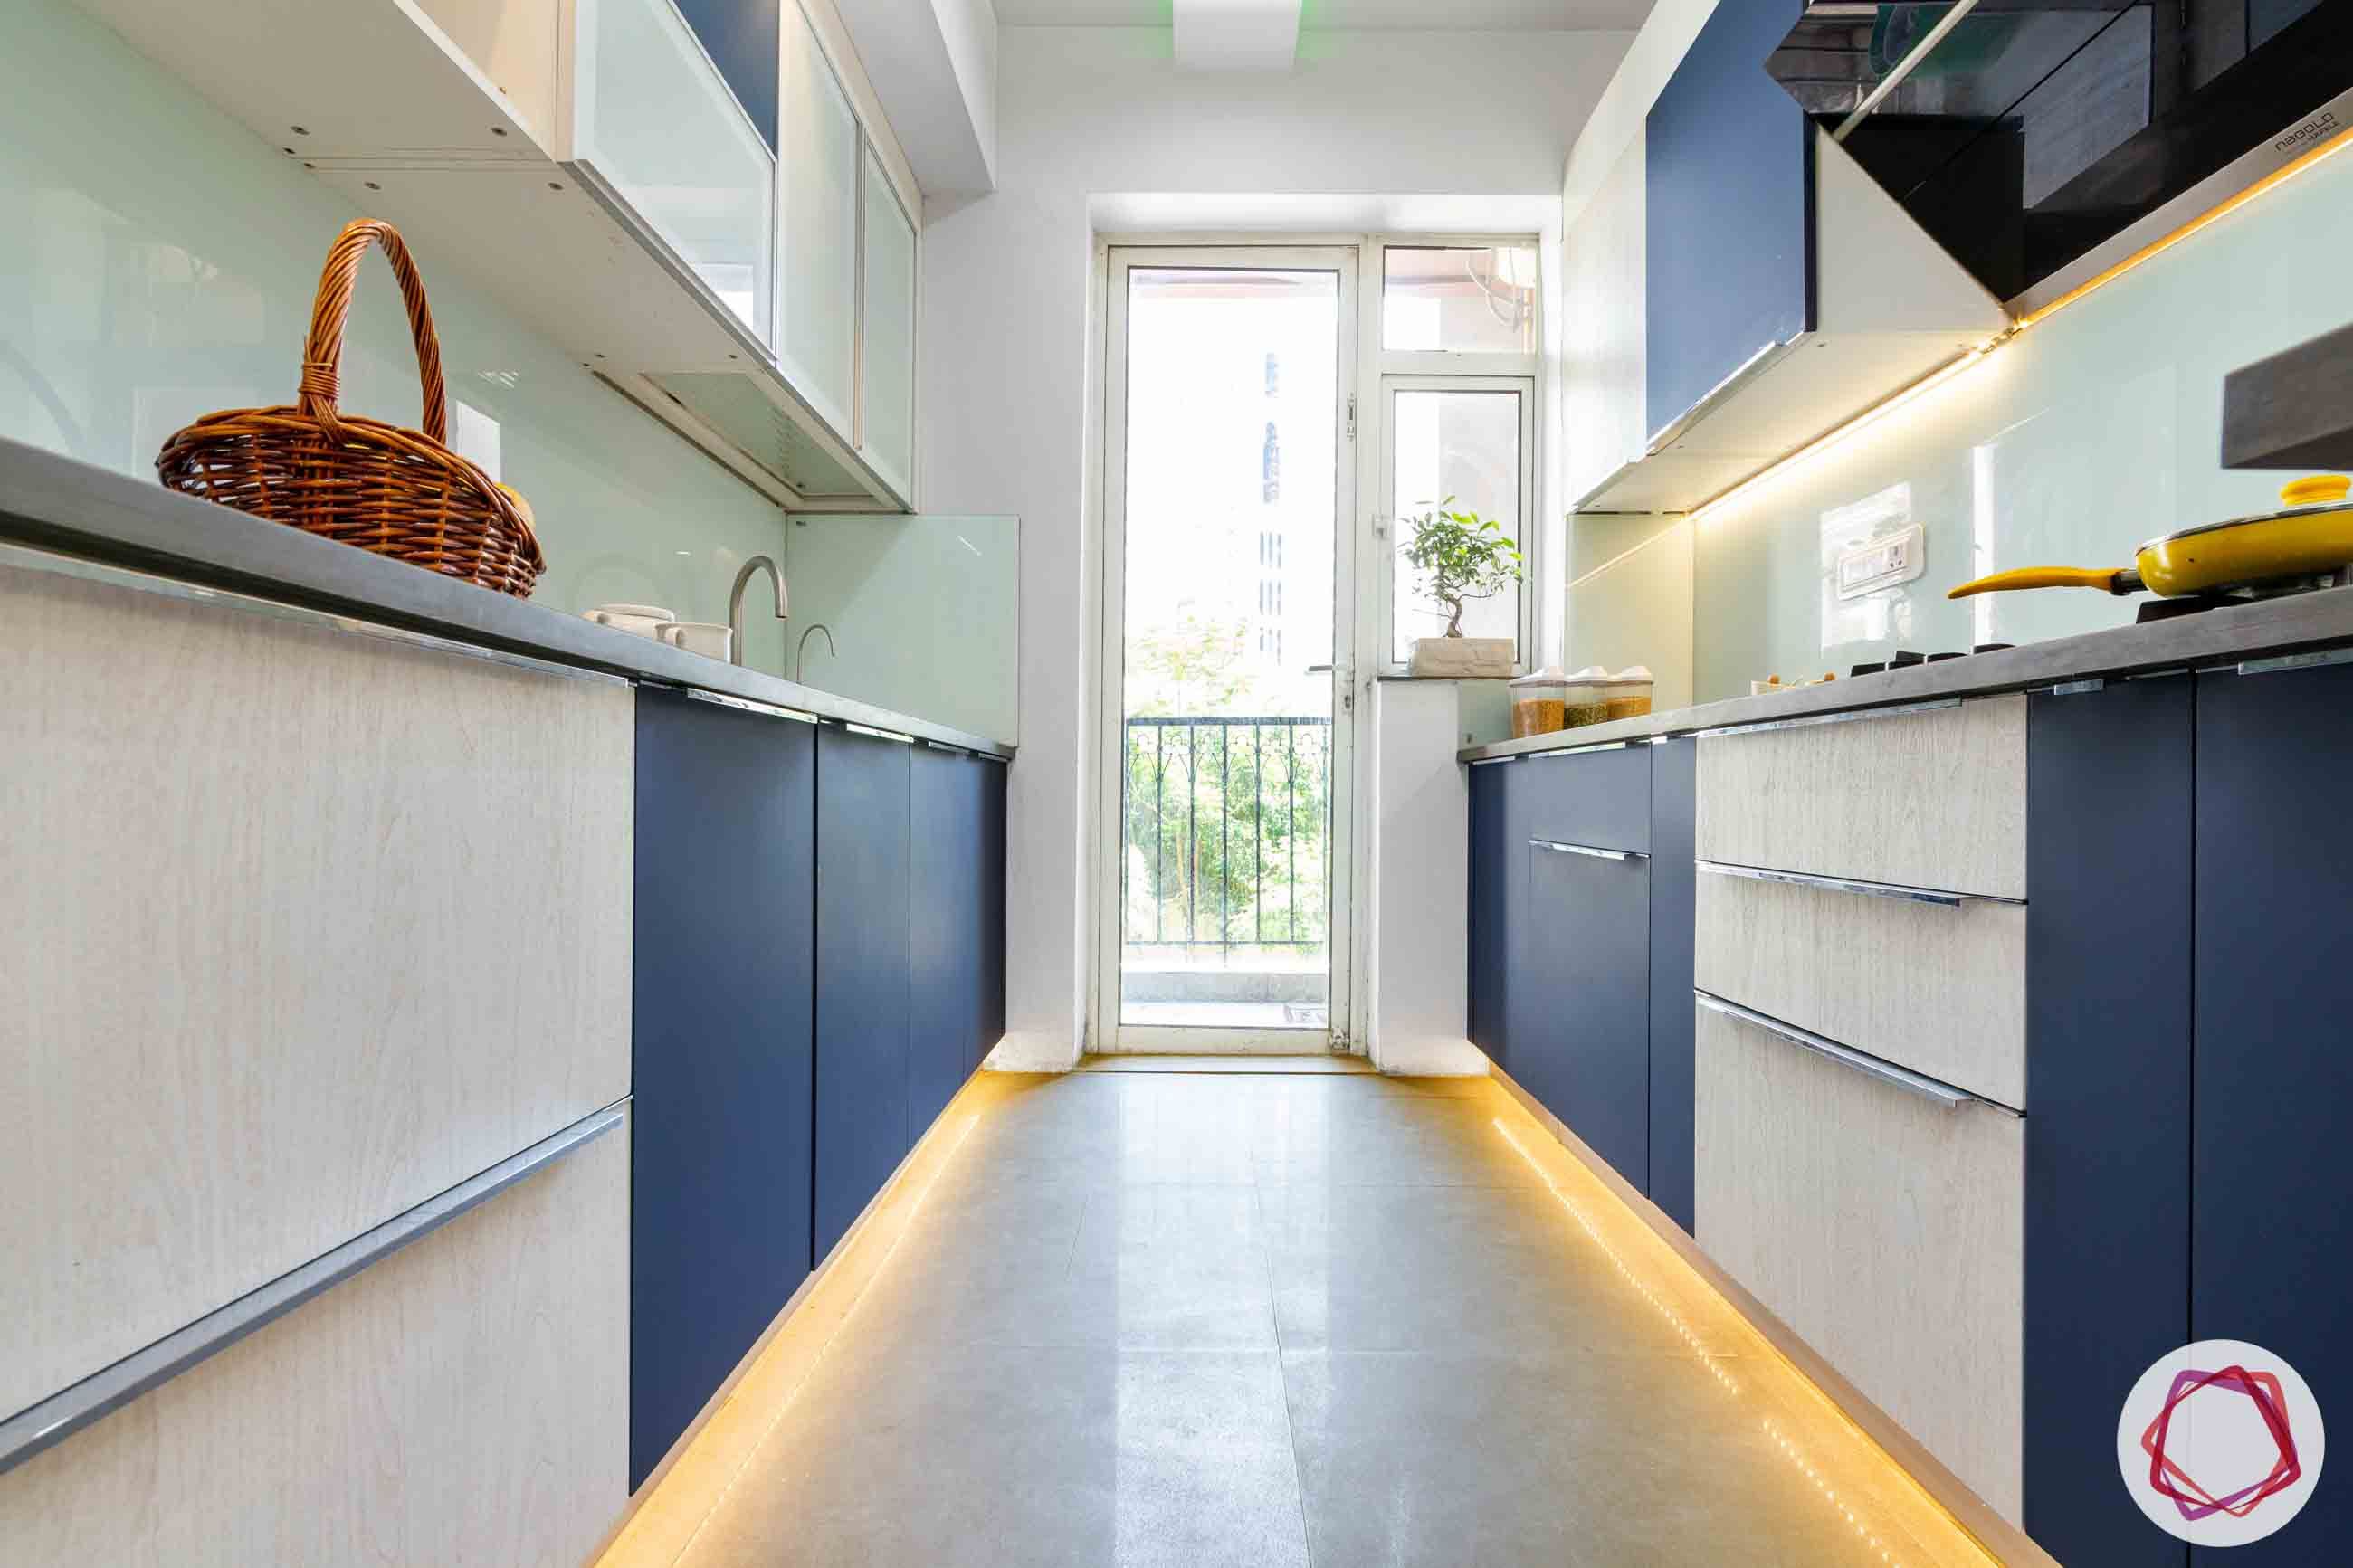 blue kitchen designs-profile lighting for kitchen cabinets